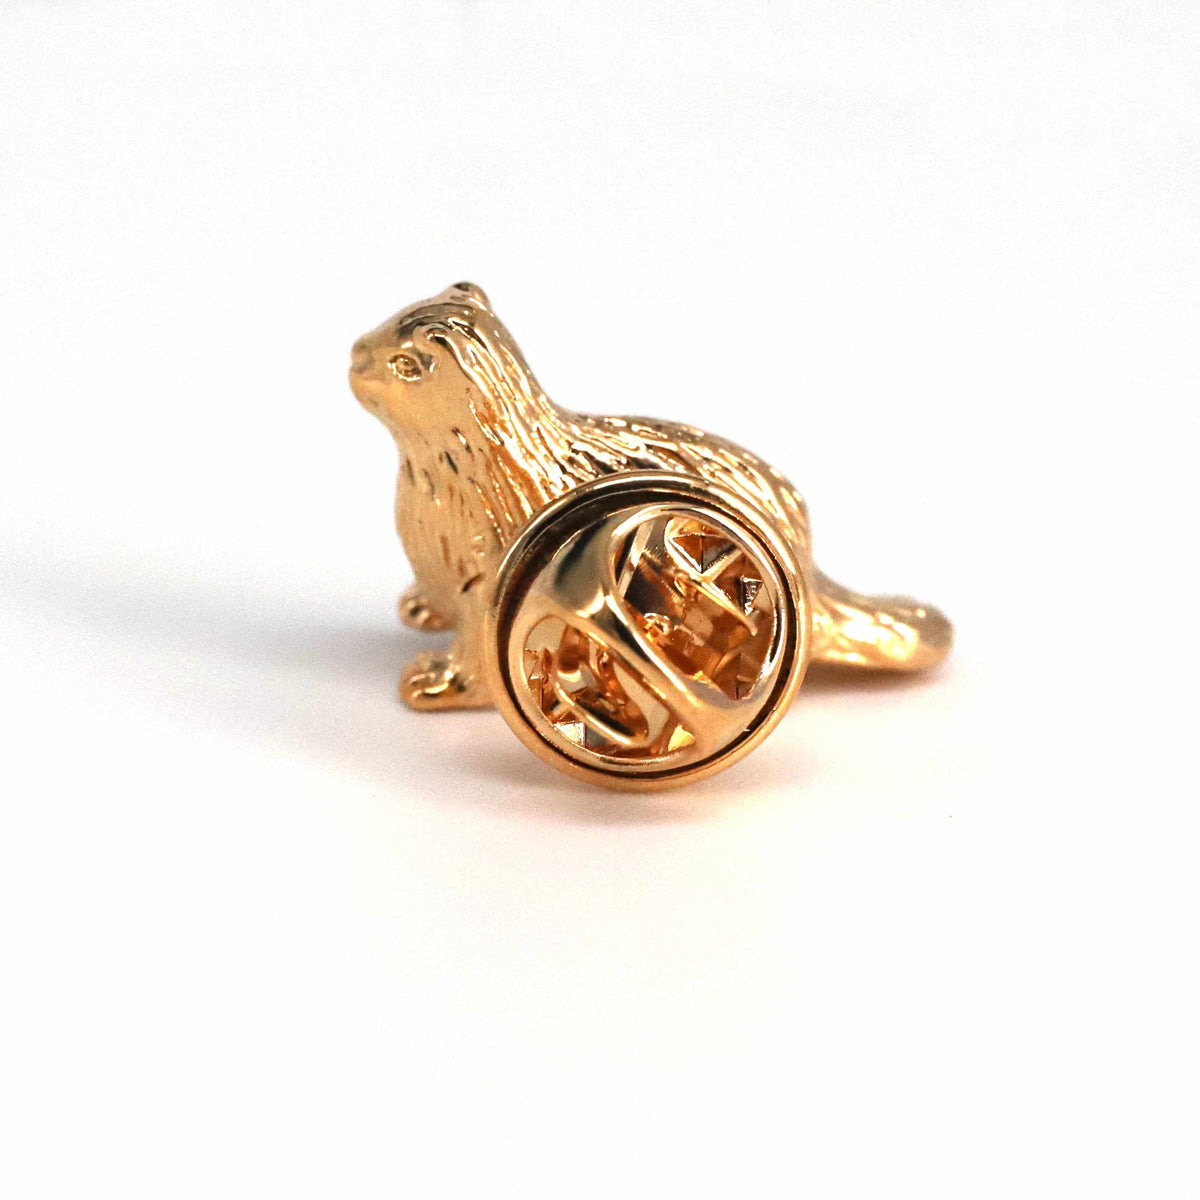 Otter Singapore Gold Pin-MarZthomson-Cufflinks.com.sg